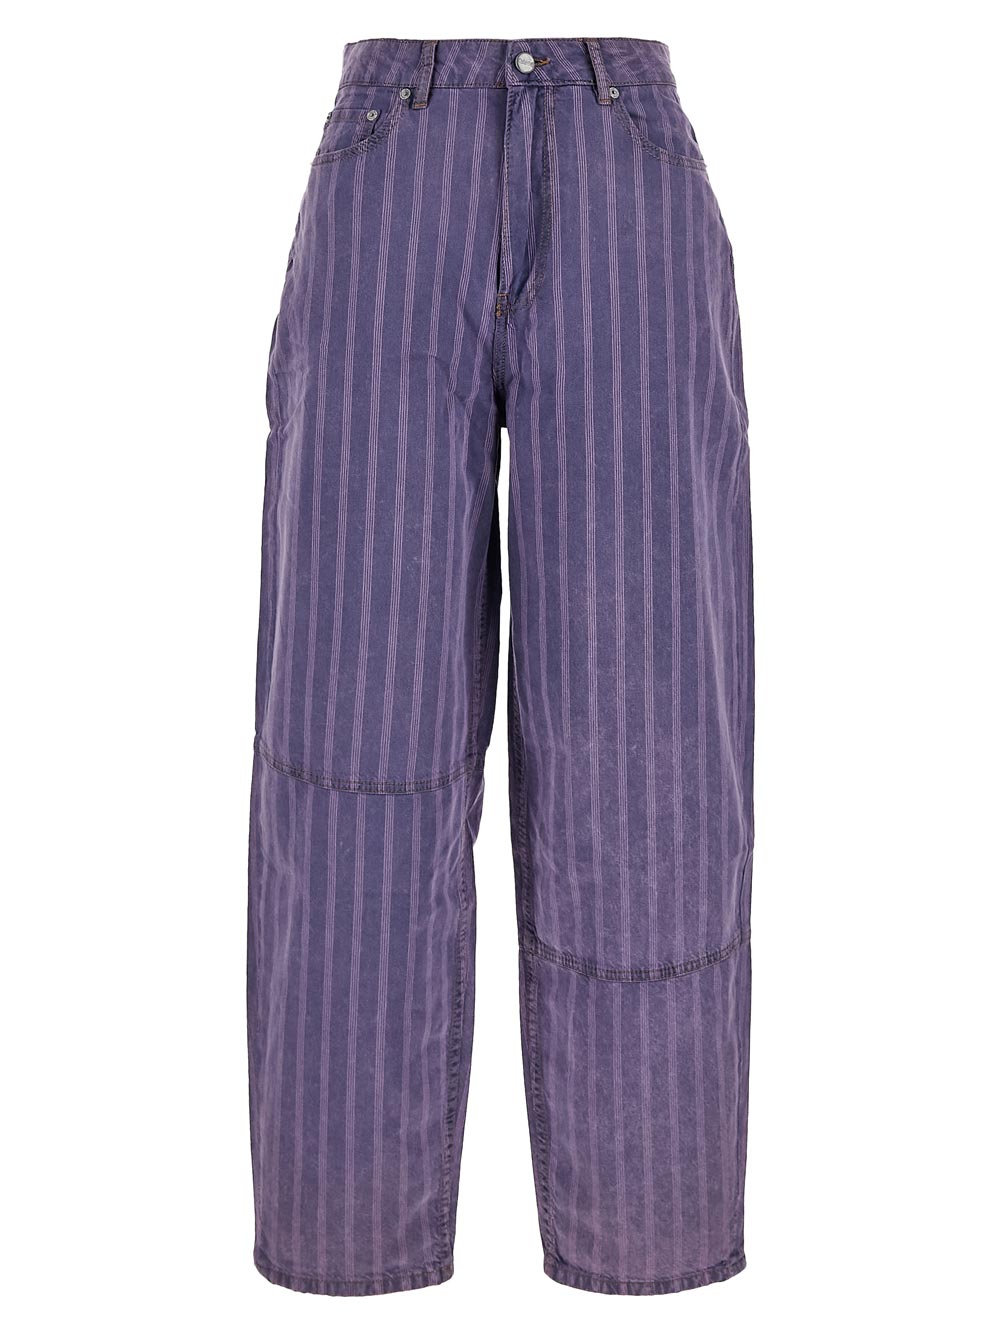 Ganni Purple Striped Stary Jeans